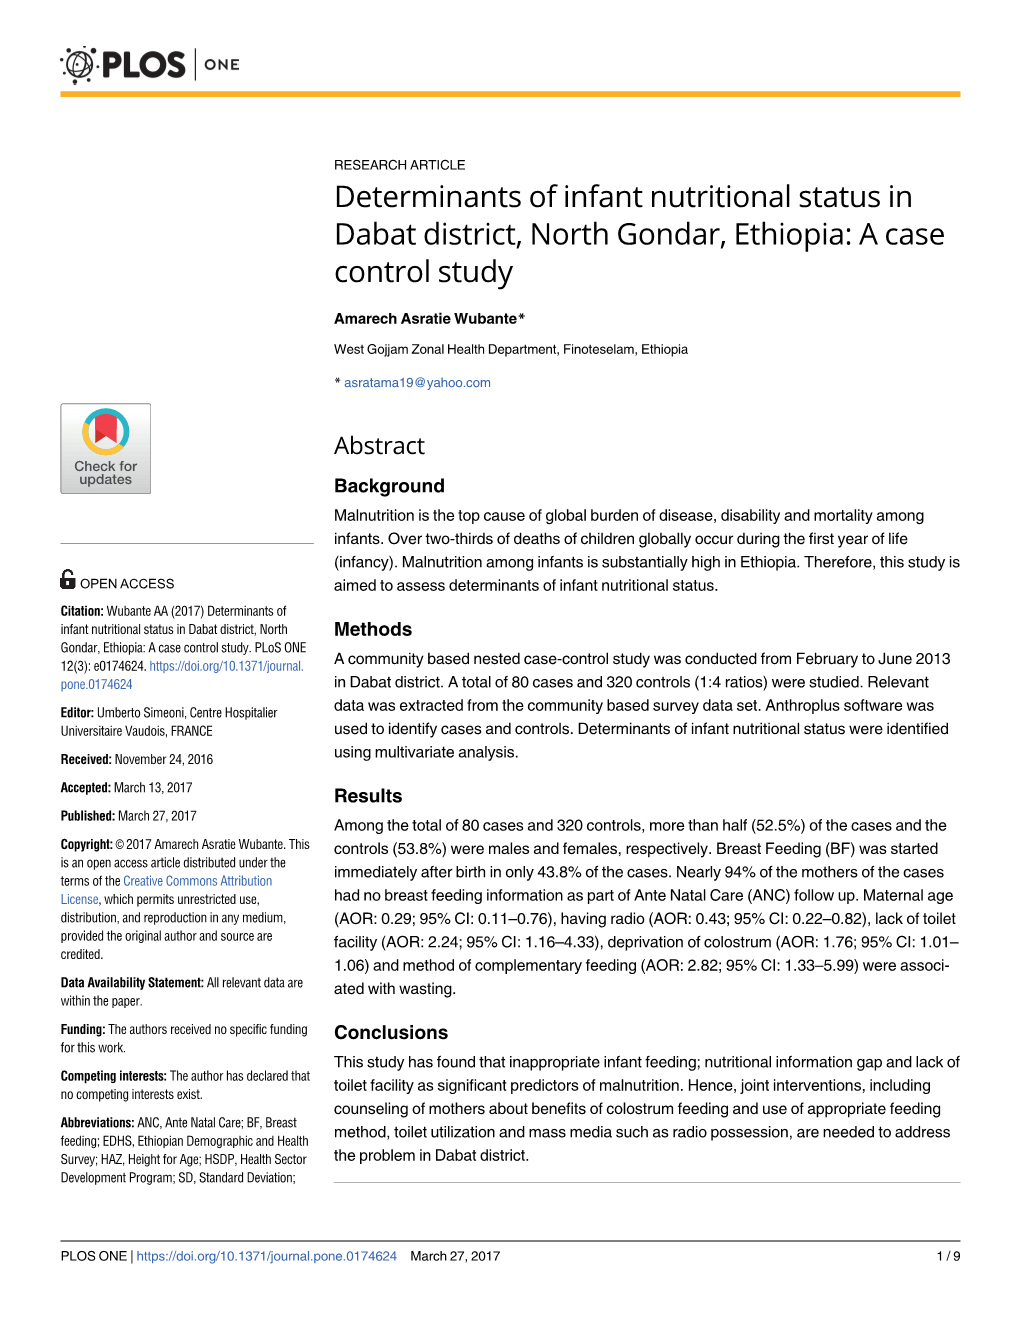 Determinants of Infant Nutritional Status in Dabat District, North Gondar, Ethiopia: a Case Control Study